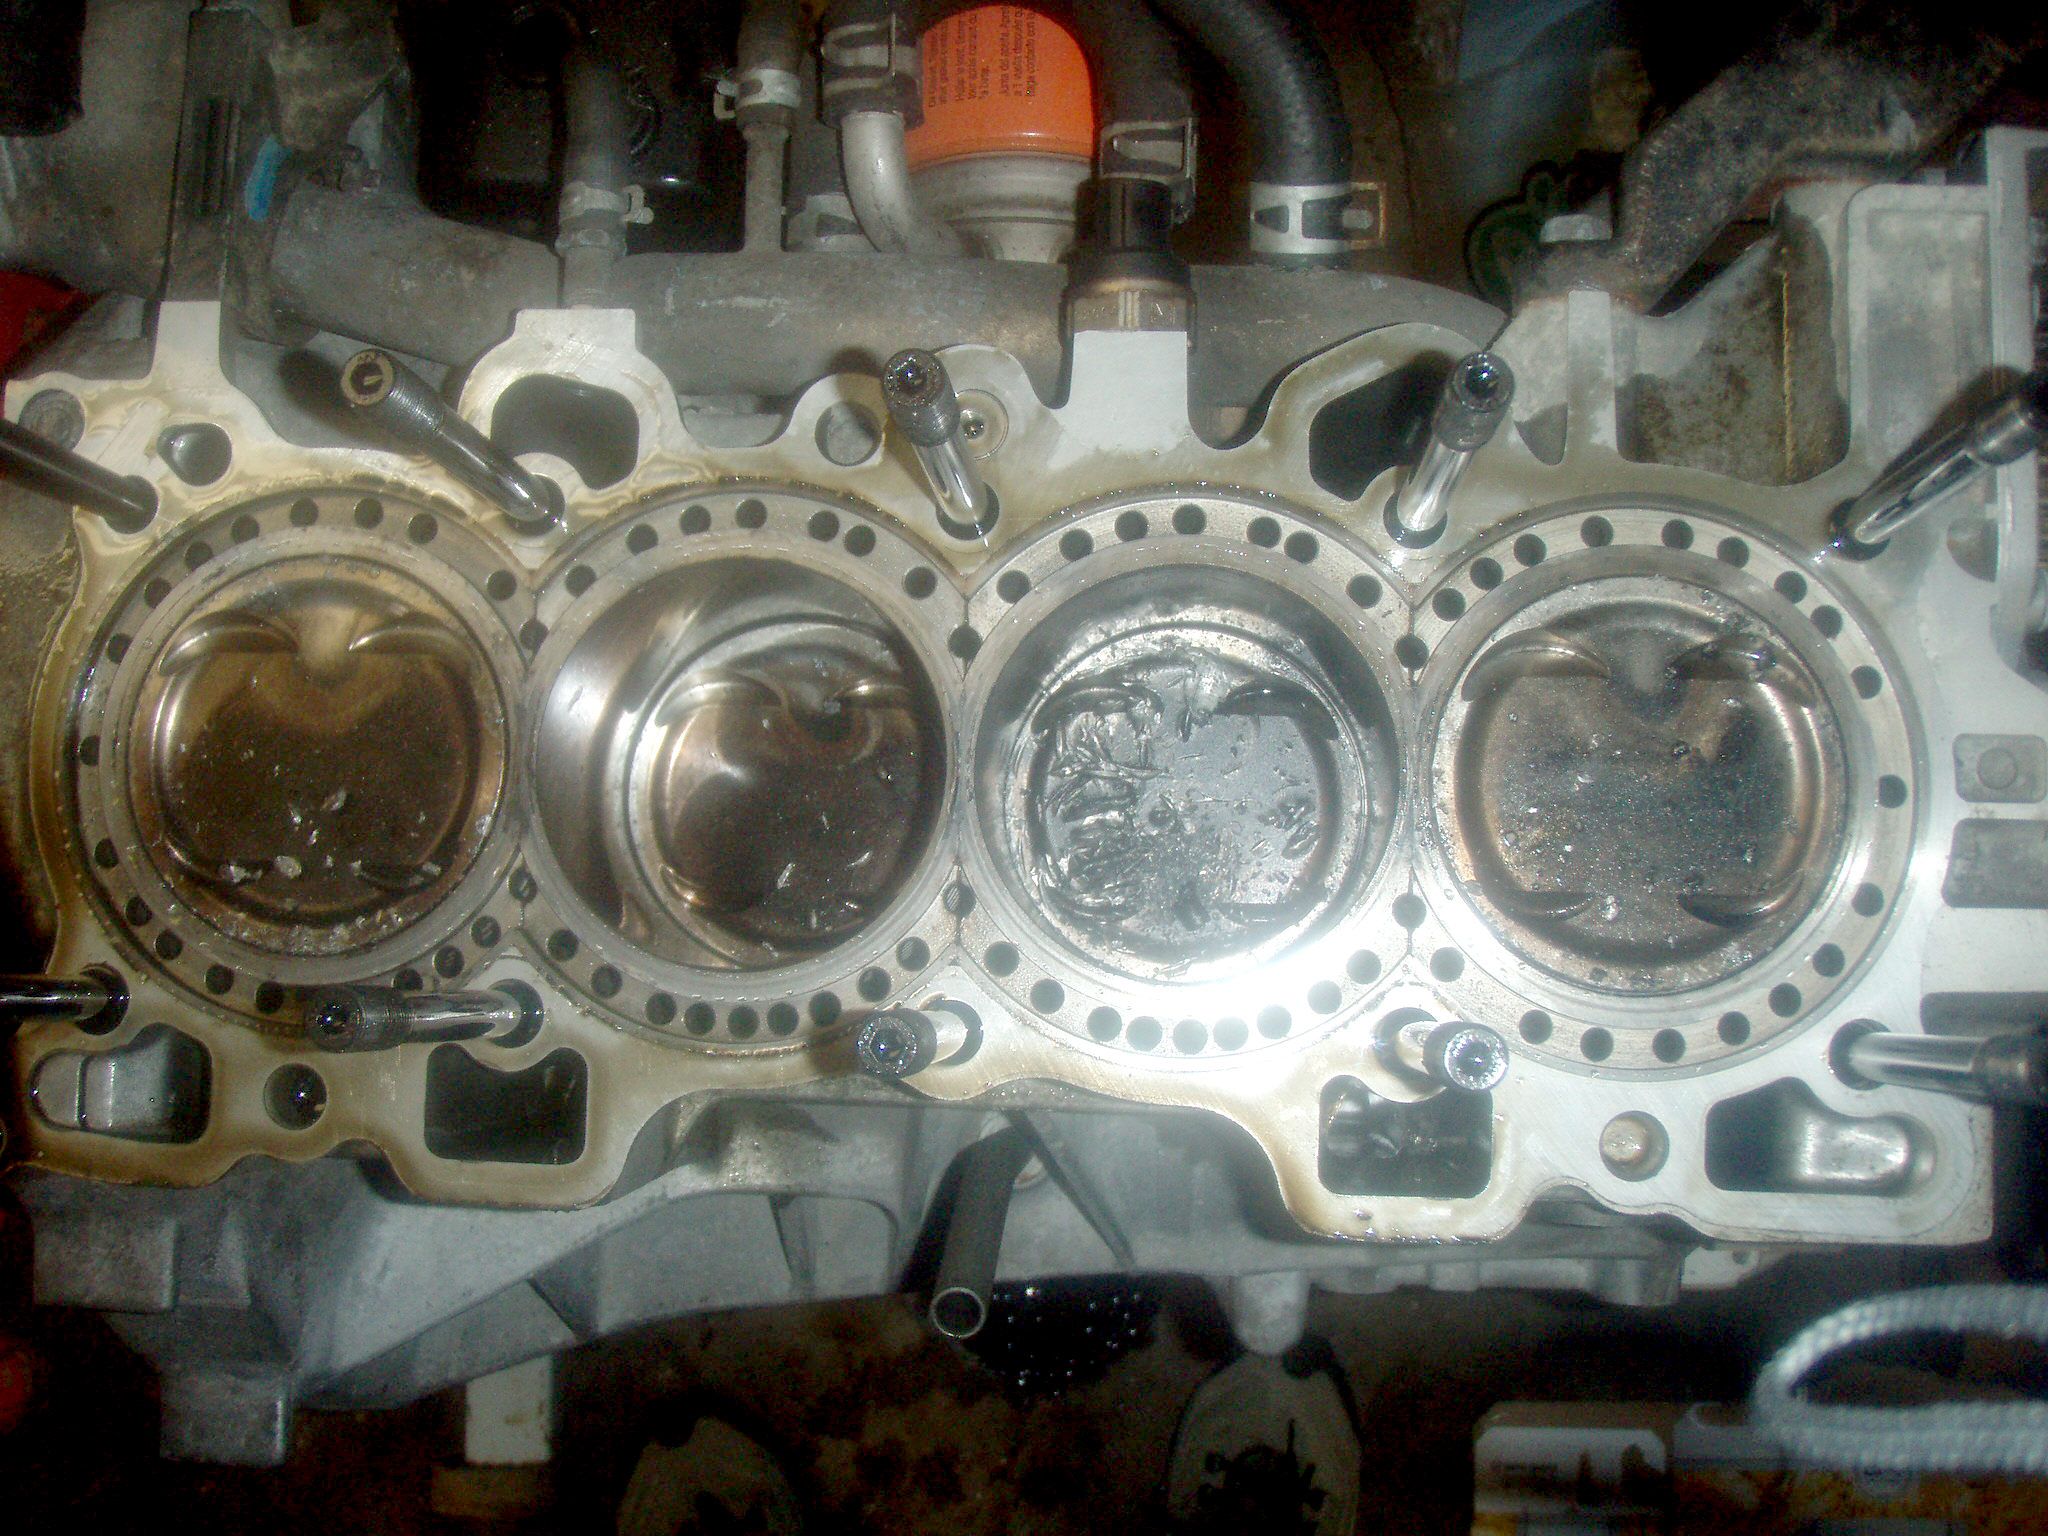 Broken valves no 2 cylinder